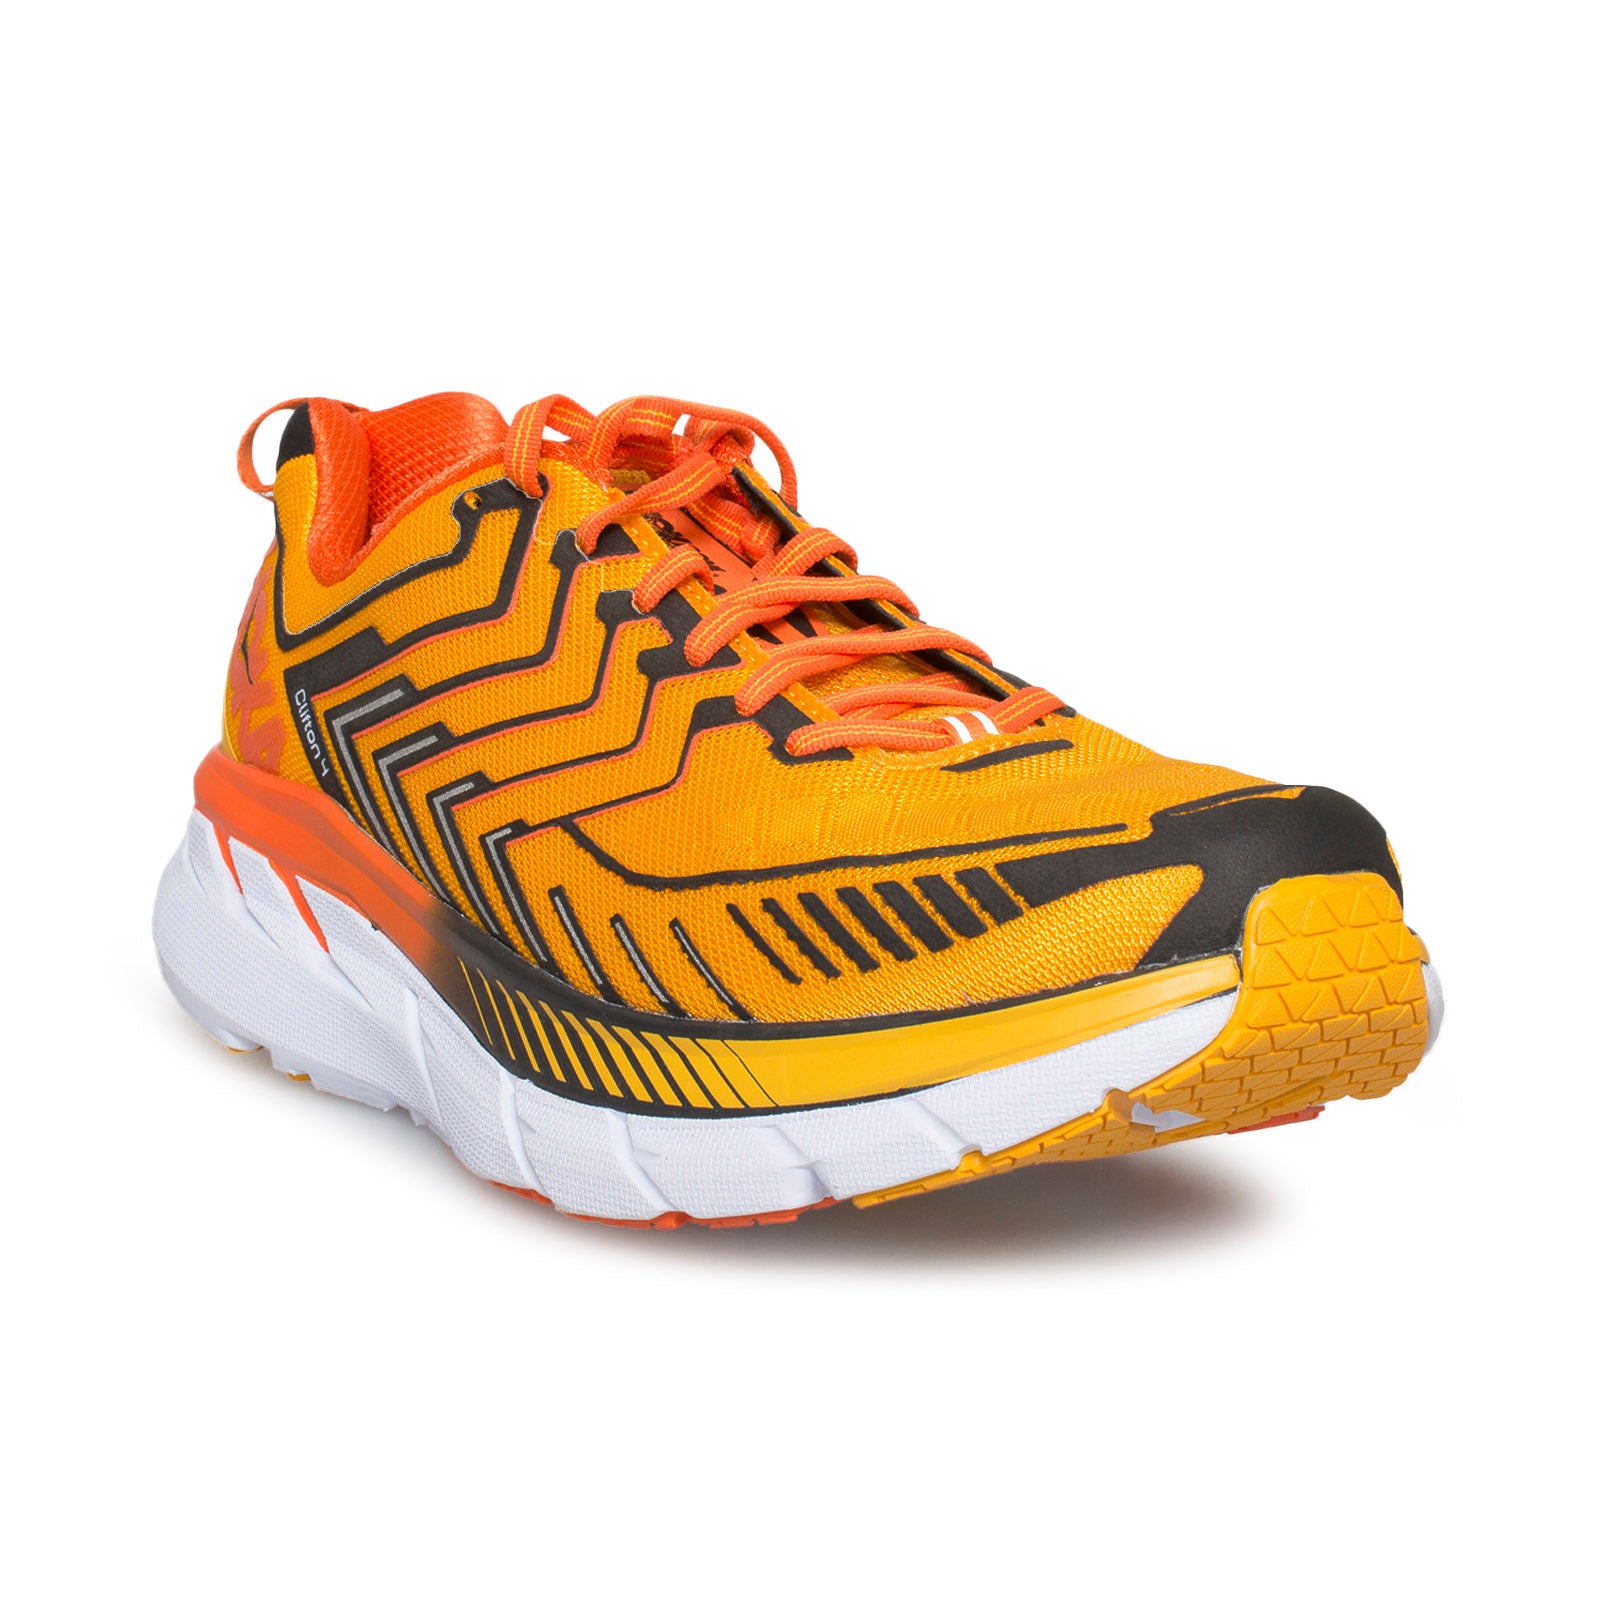 Hoka One One Clifton 4 Saffron / Red Orange Running Shoes - Men's ...